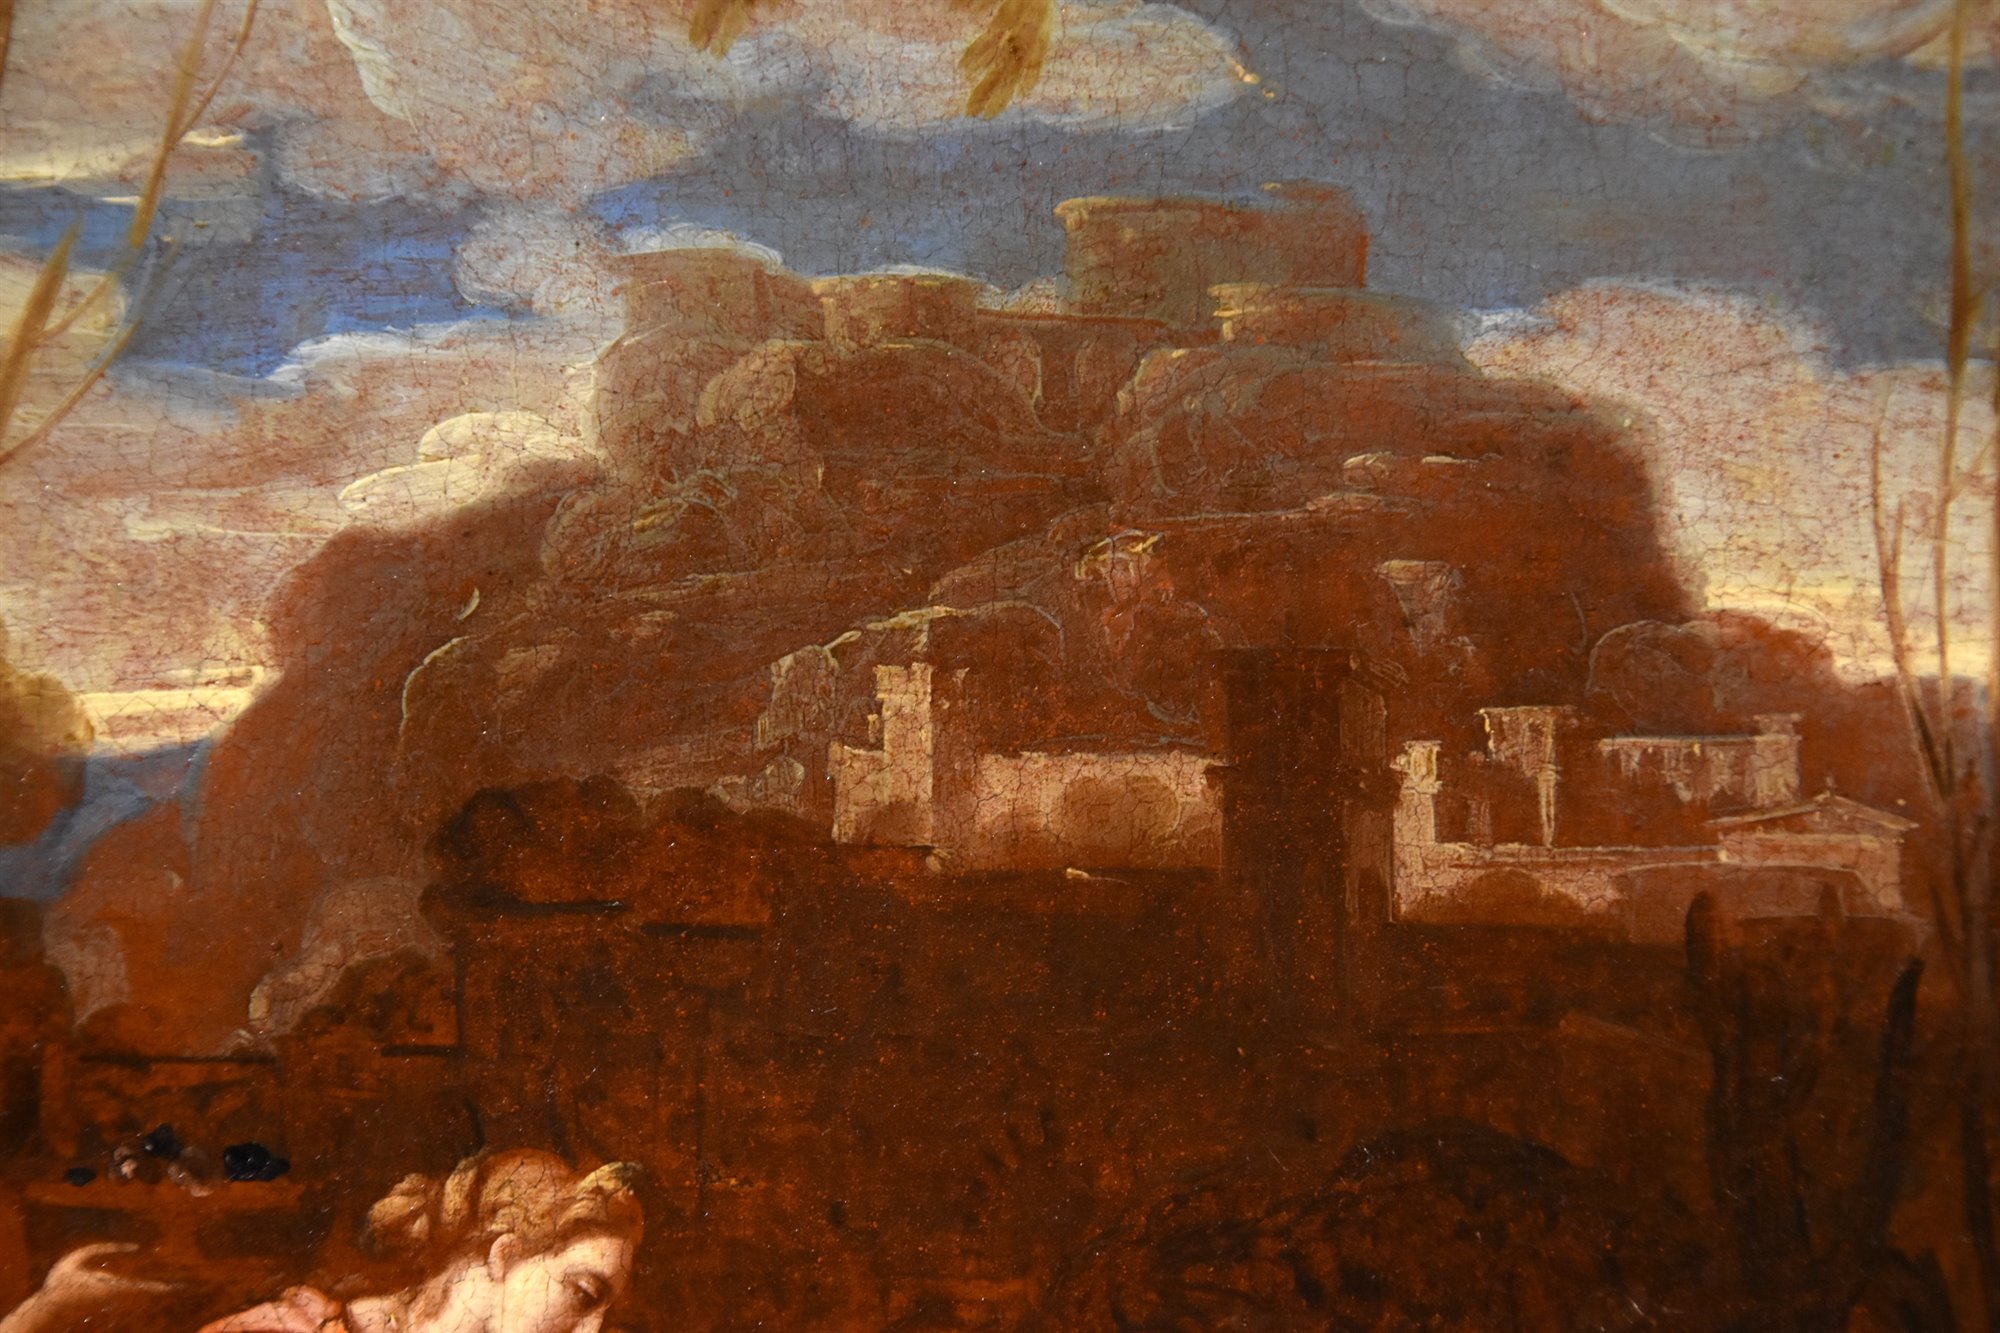 Bottega di Nicolas Poussin (Les Andelys 1594 - Roma 1665)